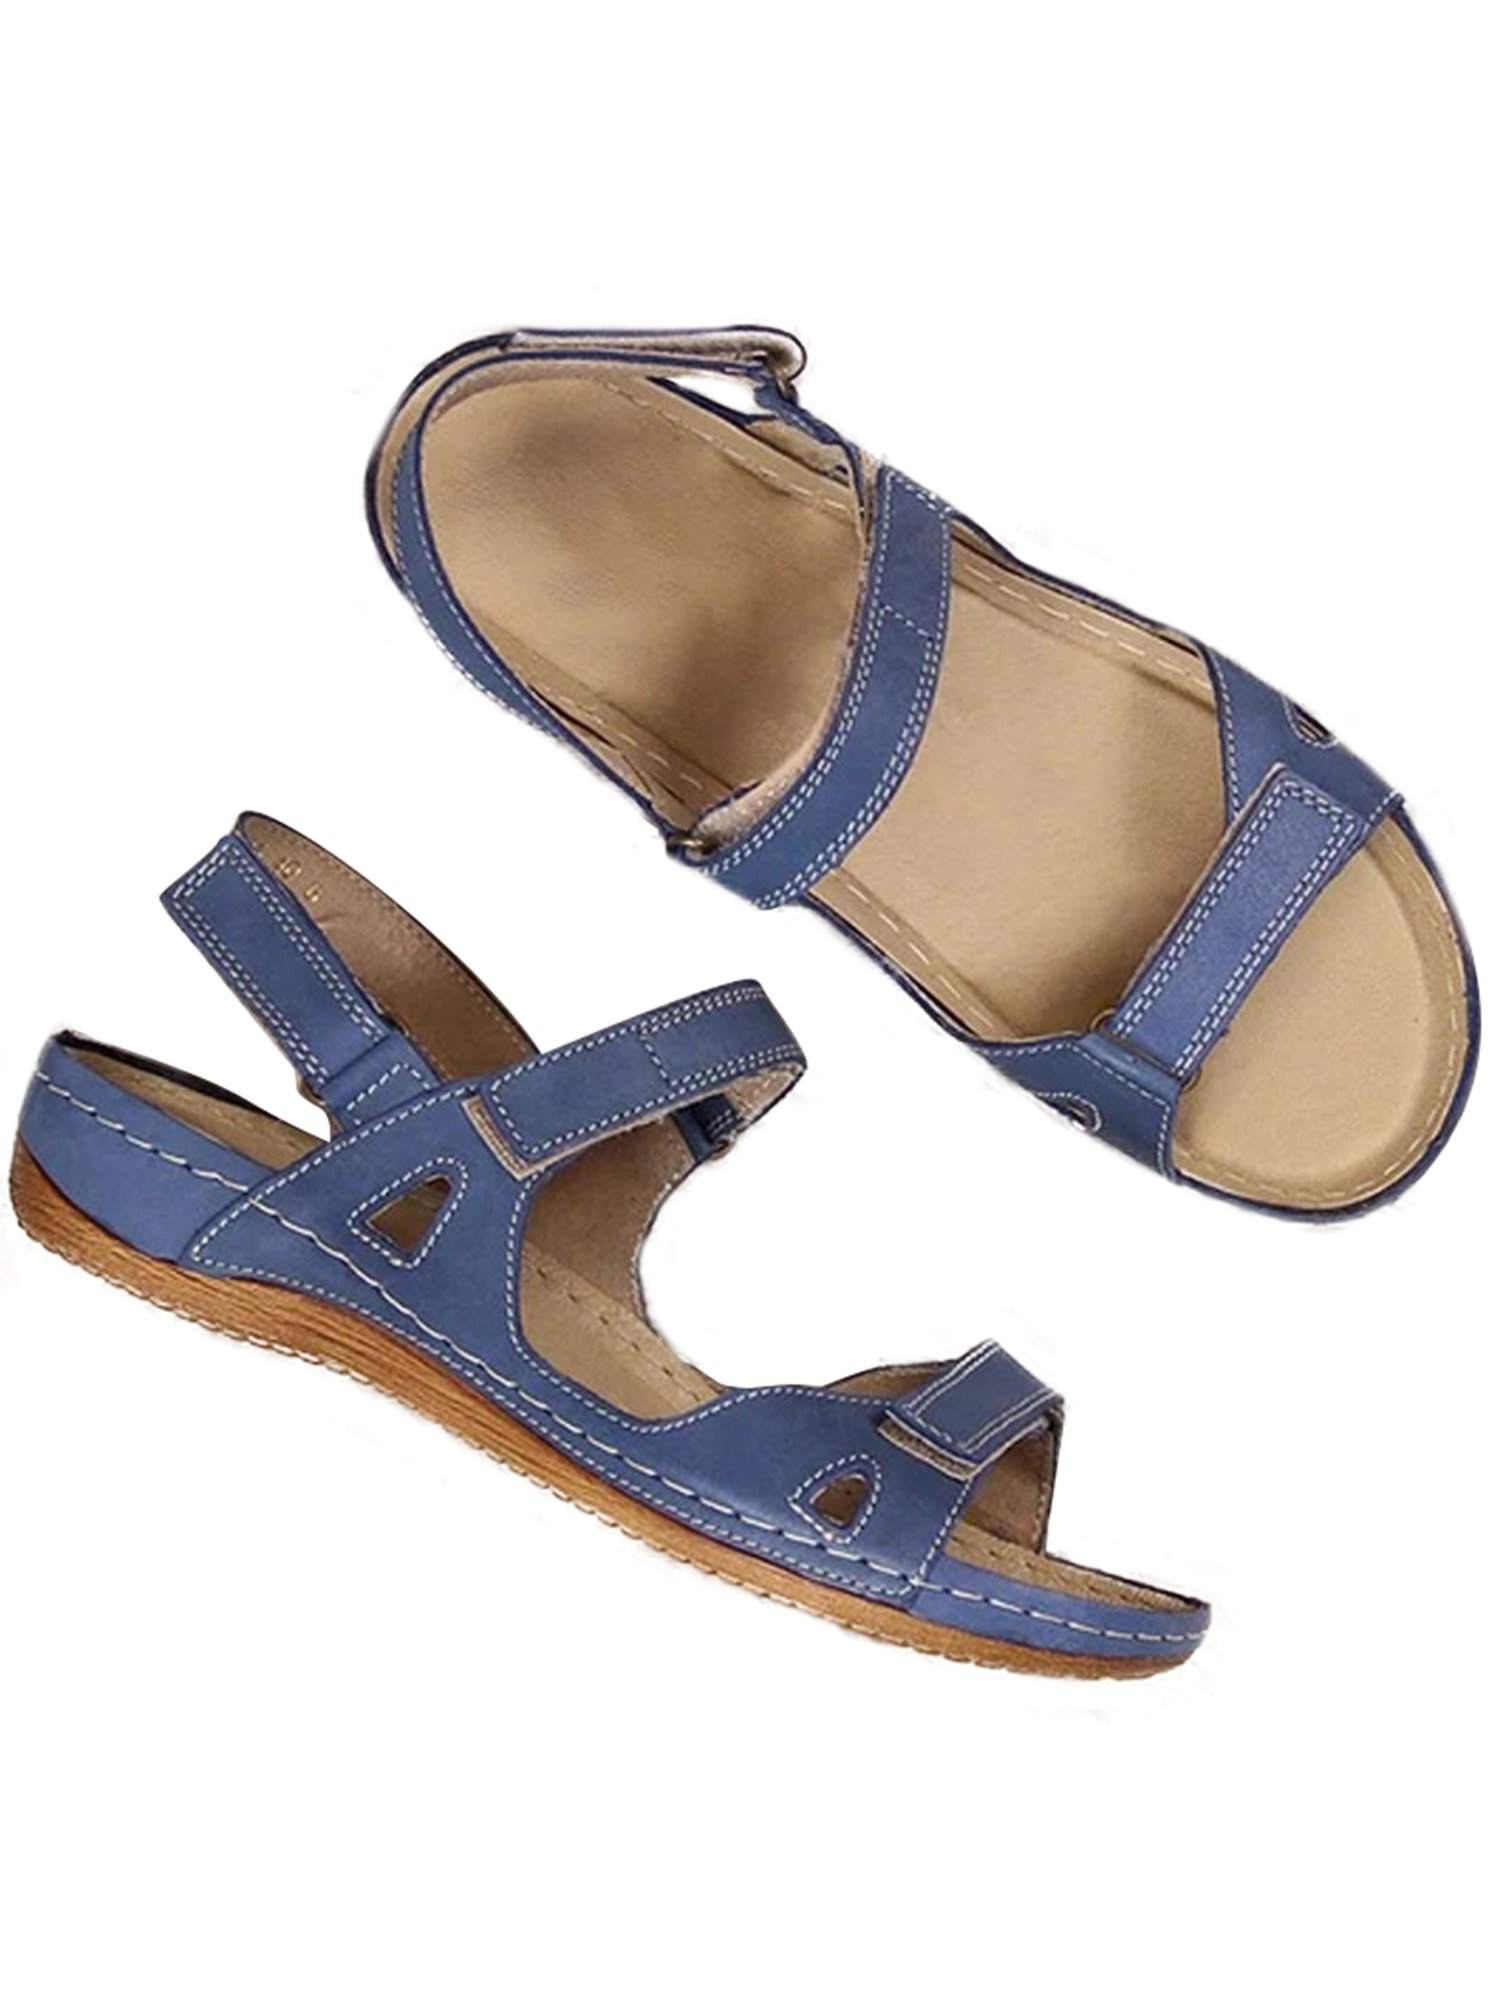 Womens Summer Boho Flip Flops Sandal Cross T Strap Thong Flat Casual Shoes Size - image 4 of 4